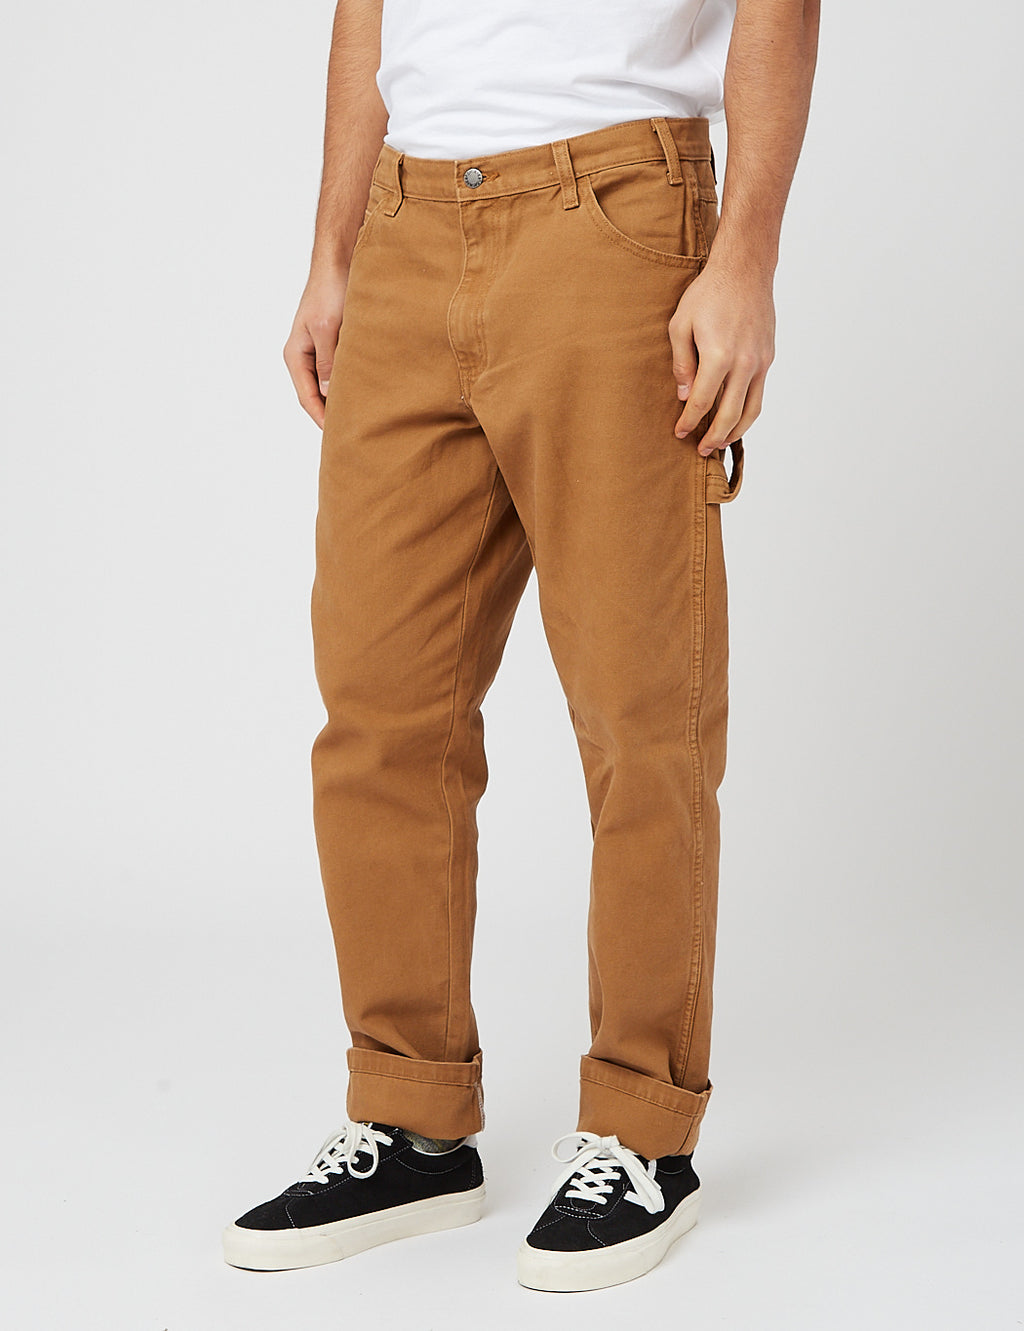 Smith's Corduroy Carpenter Pants, Men's Fashion, Bottoms, Trousers